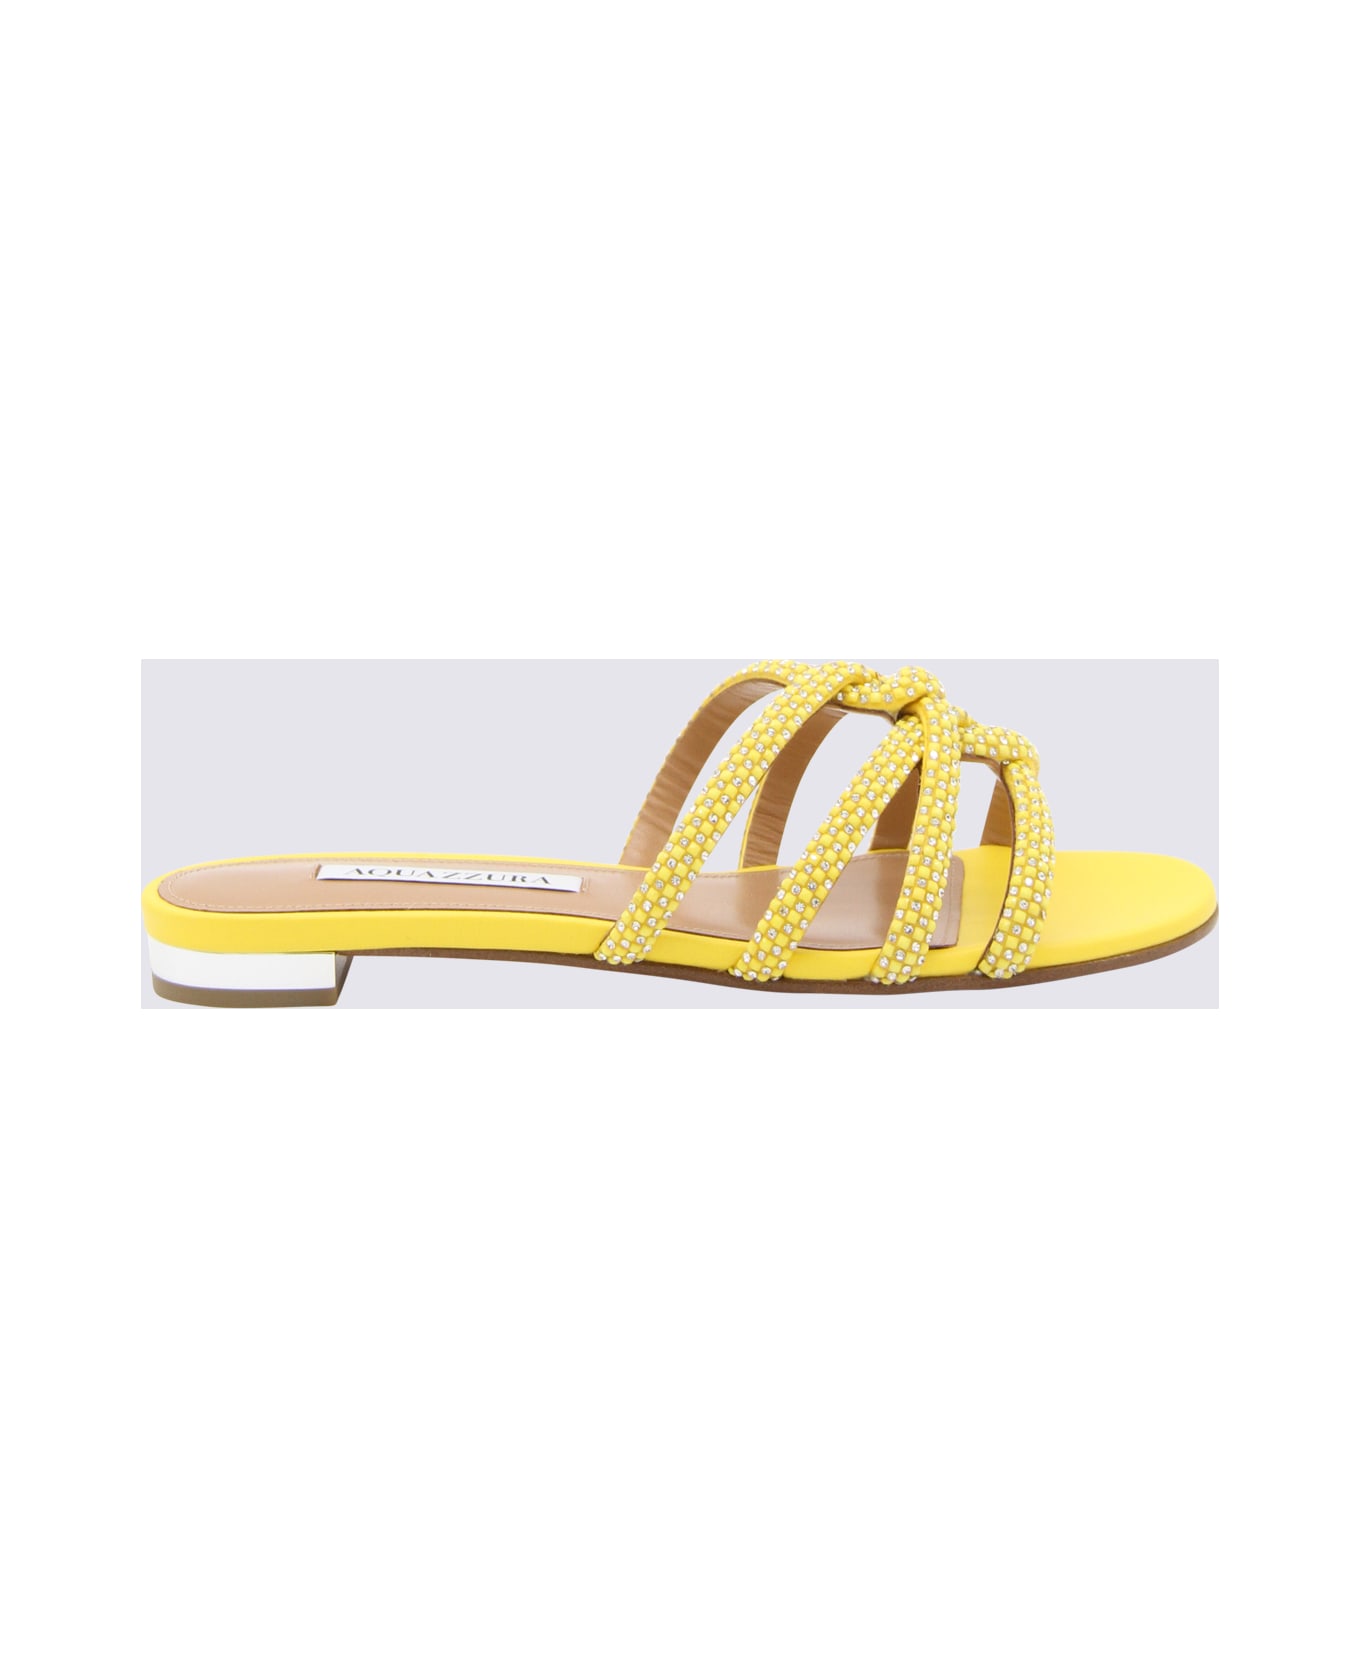 Aquazzura Yellow Leather Sandals - CITRON